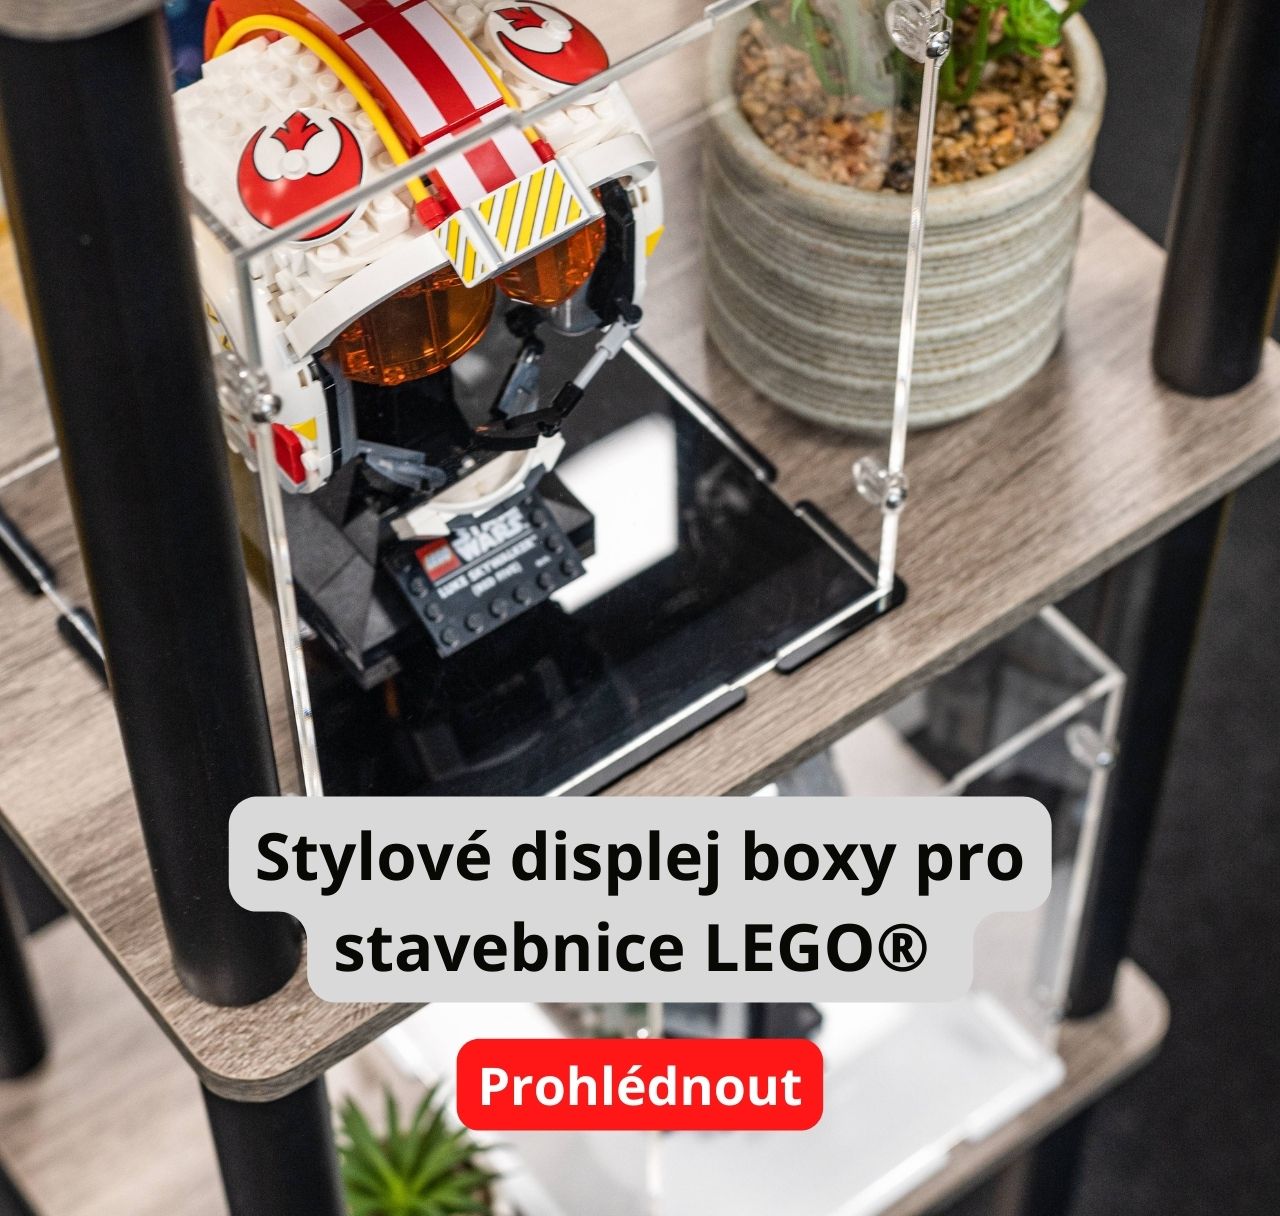 Displej boxy pro Lego stavebnice